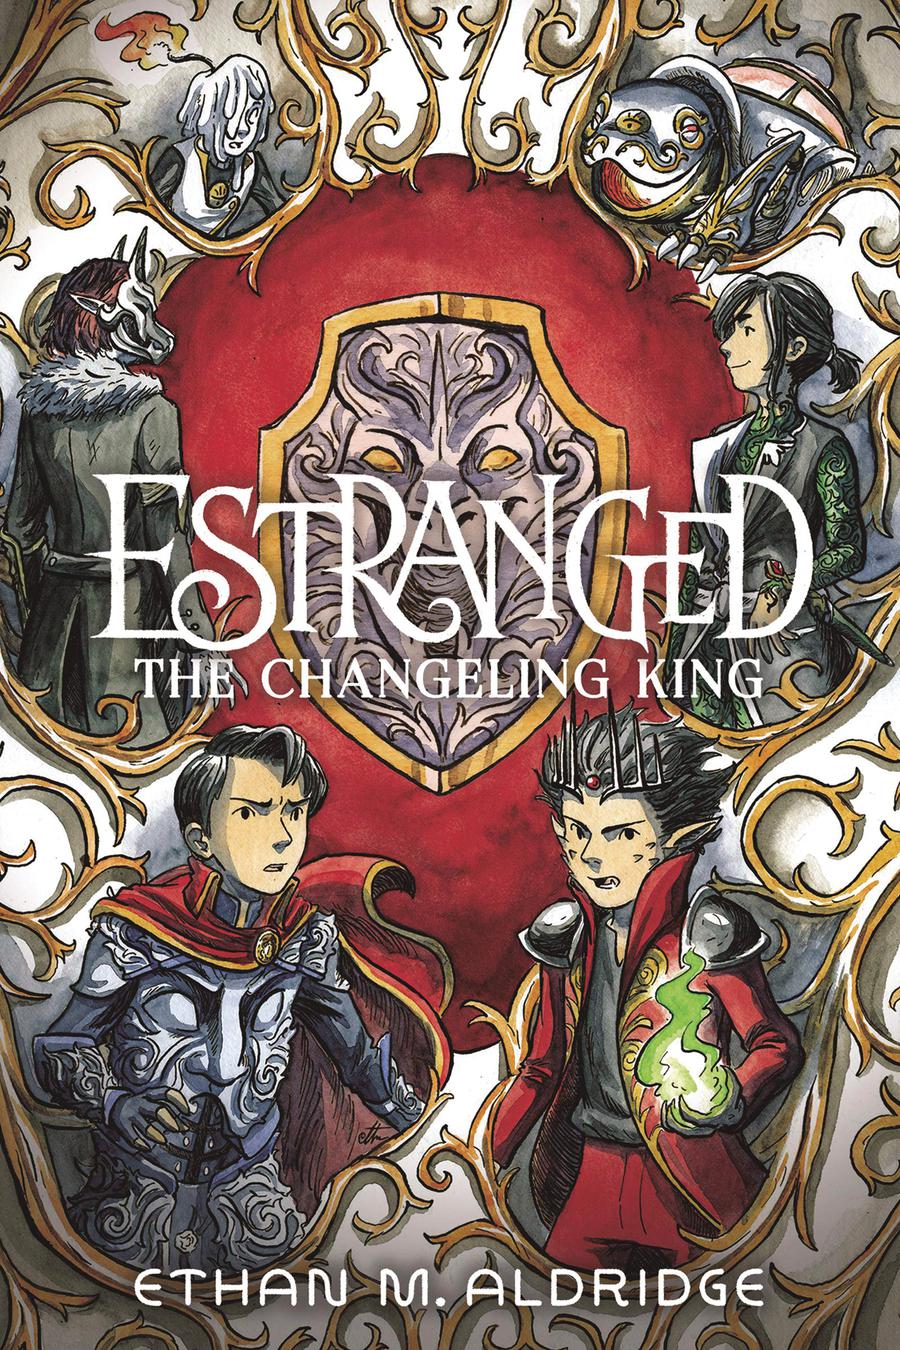 Estranged Vol 2 Changeling King HC